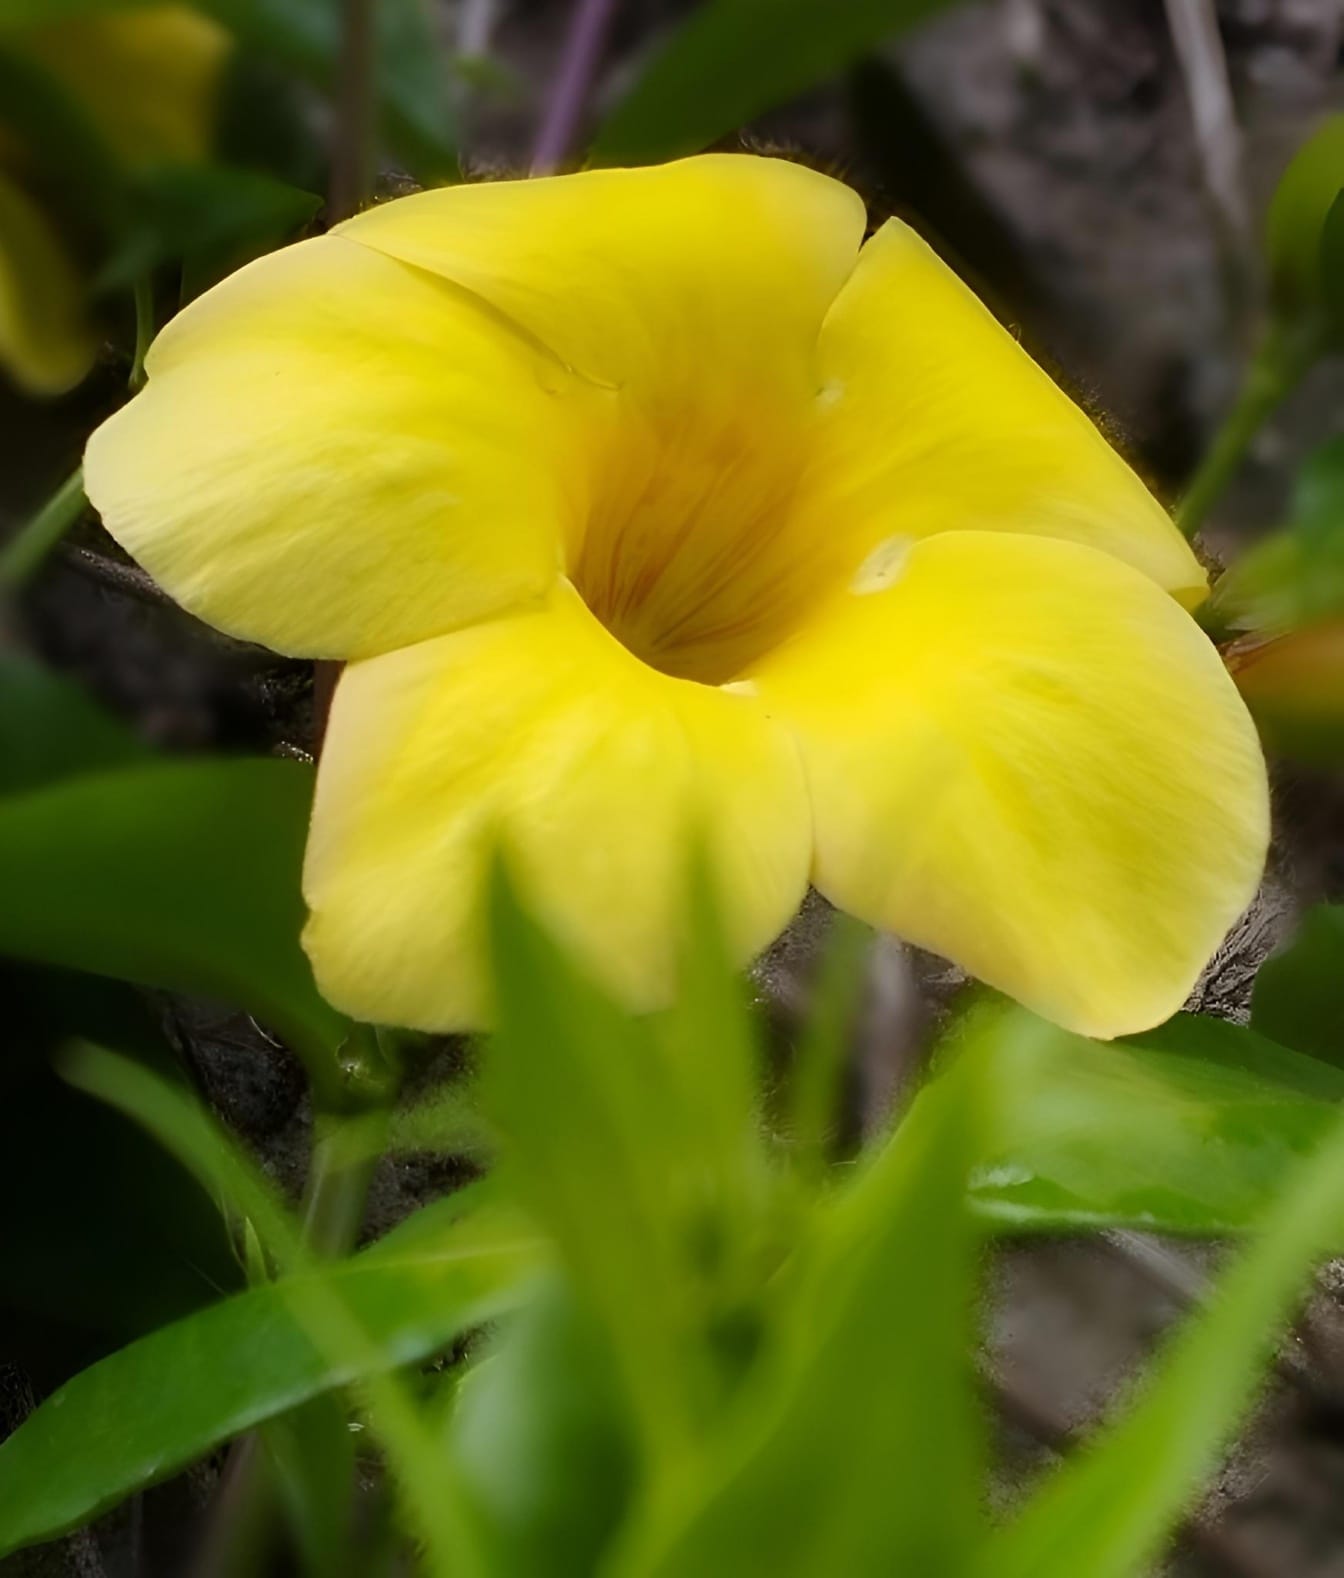 Gele bloem met groene bladeren bekend als struik Allamanda (Allamanda schottii)